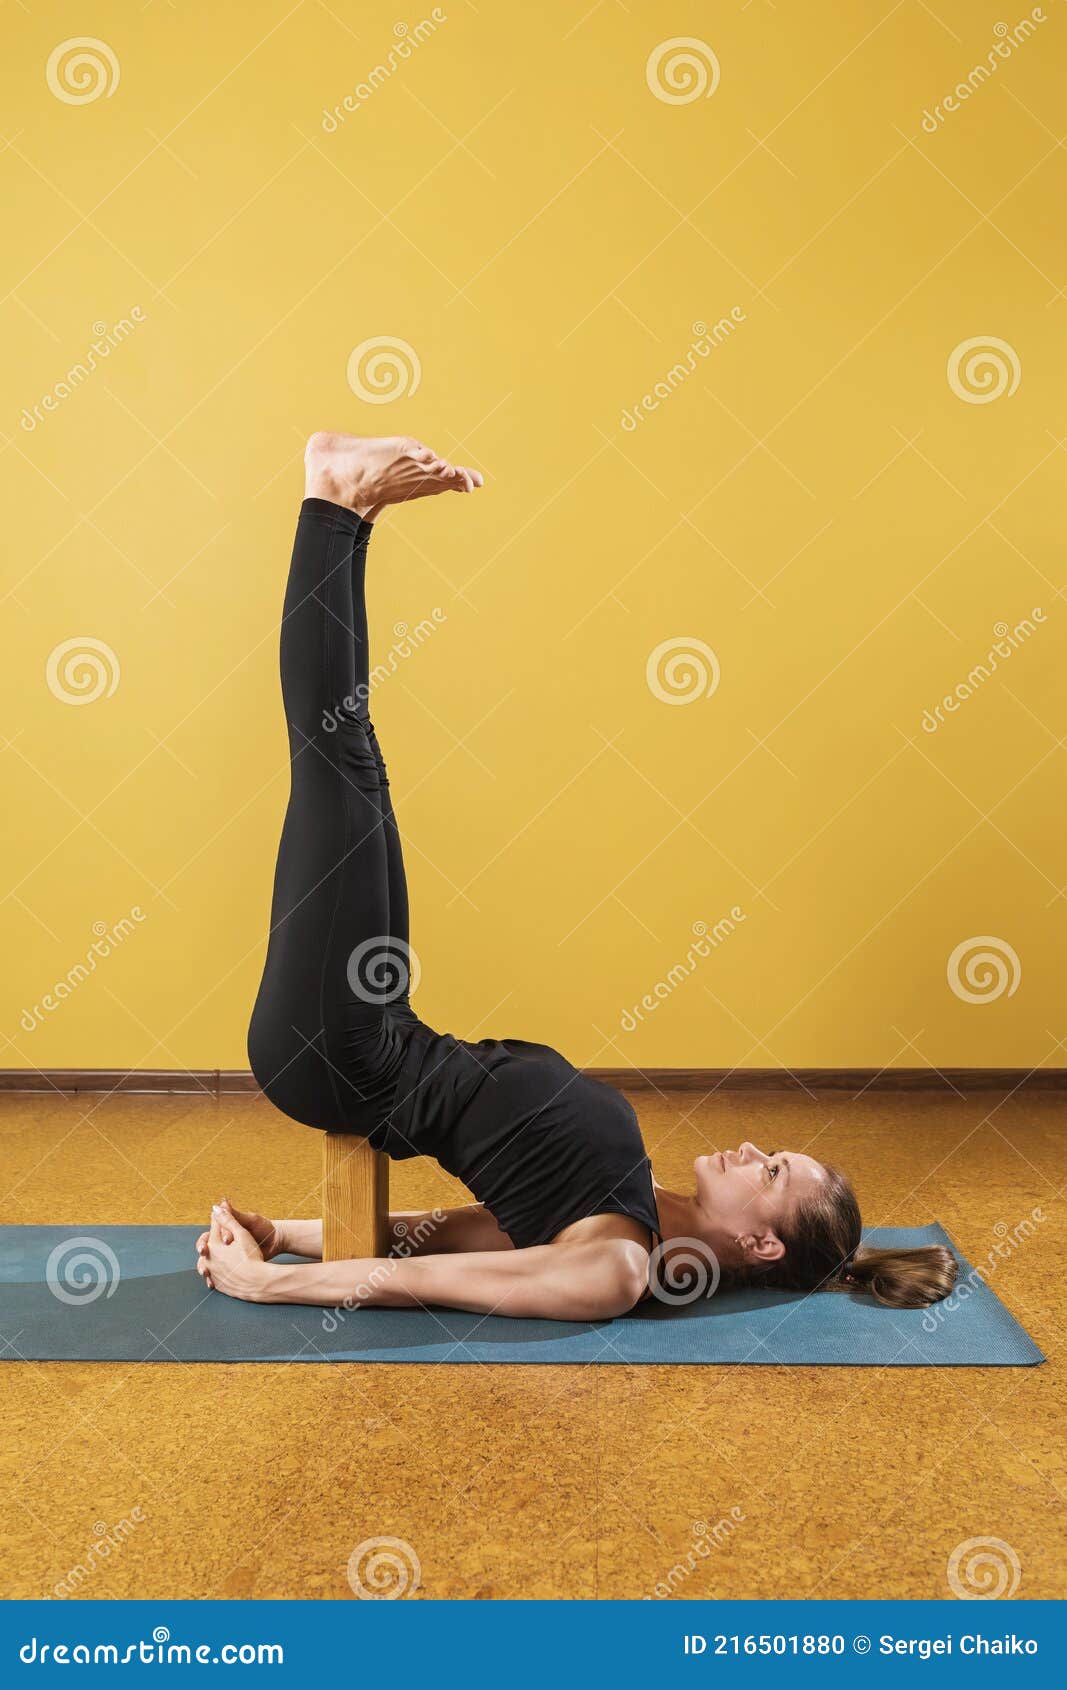 Yoga candle pose stock photo. Image of lifestyle, muscular - 50746614